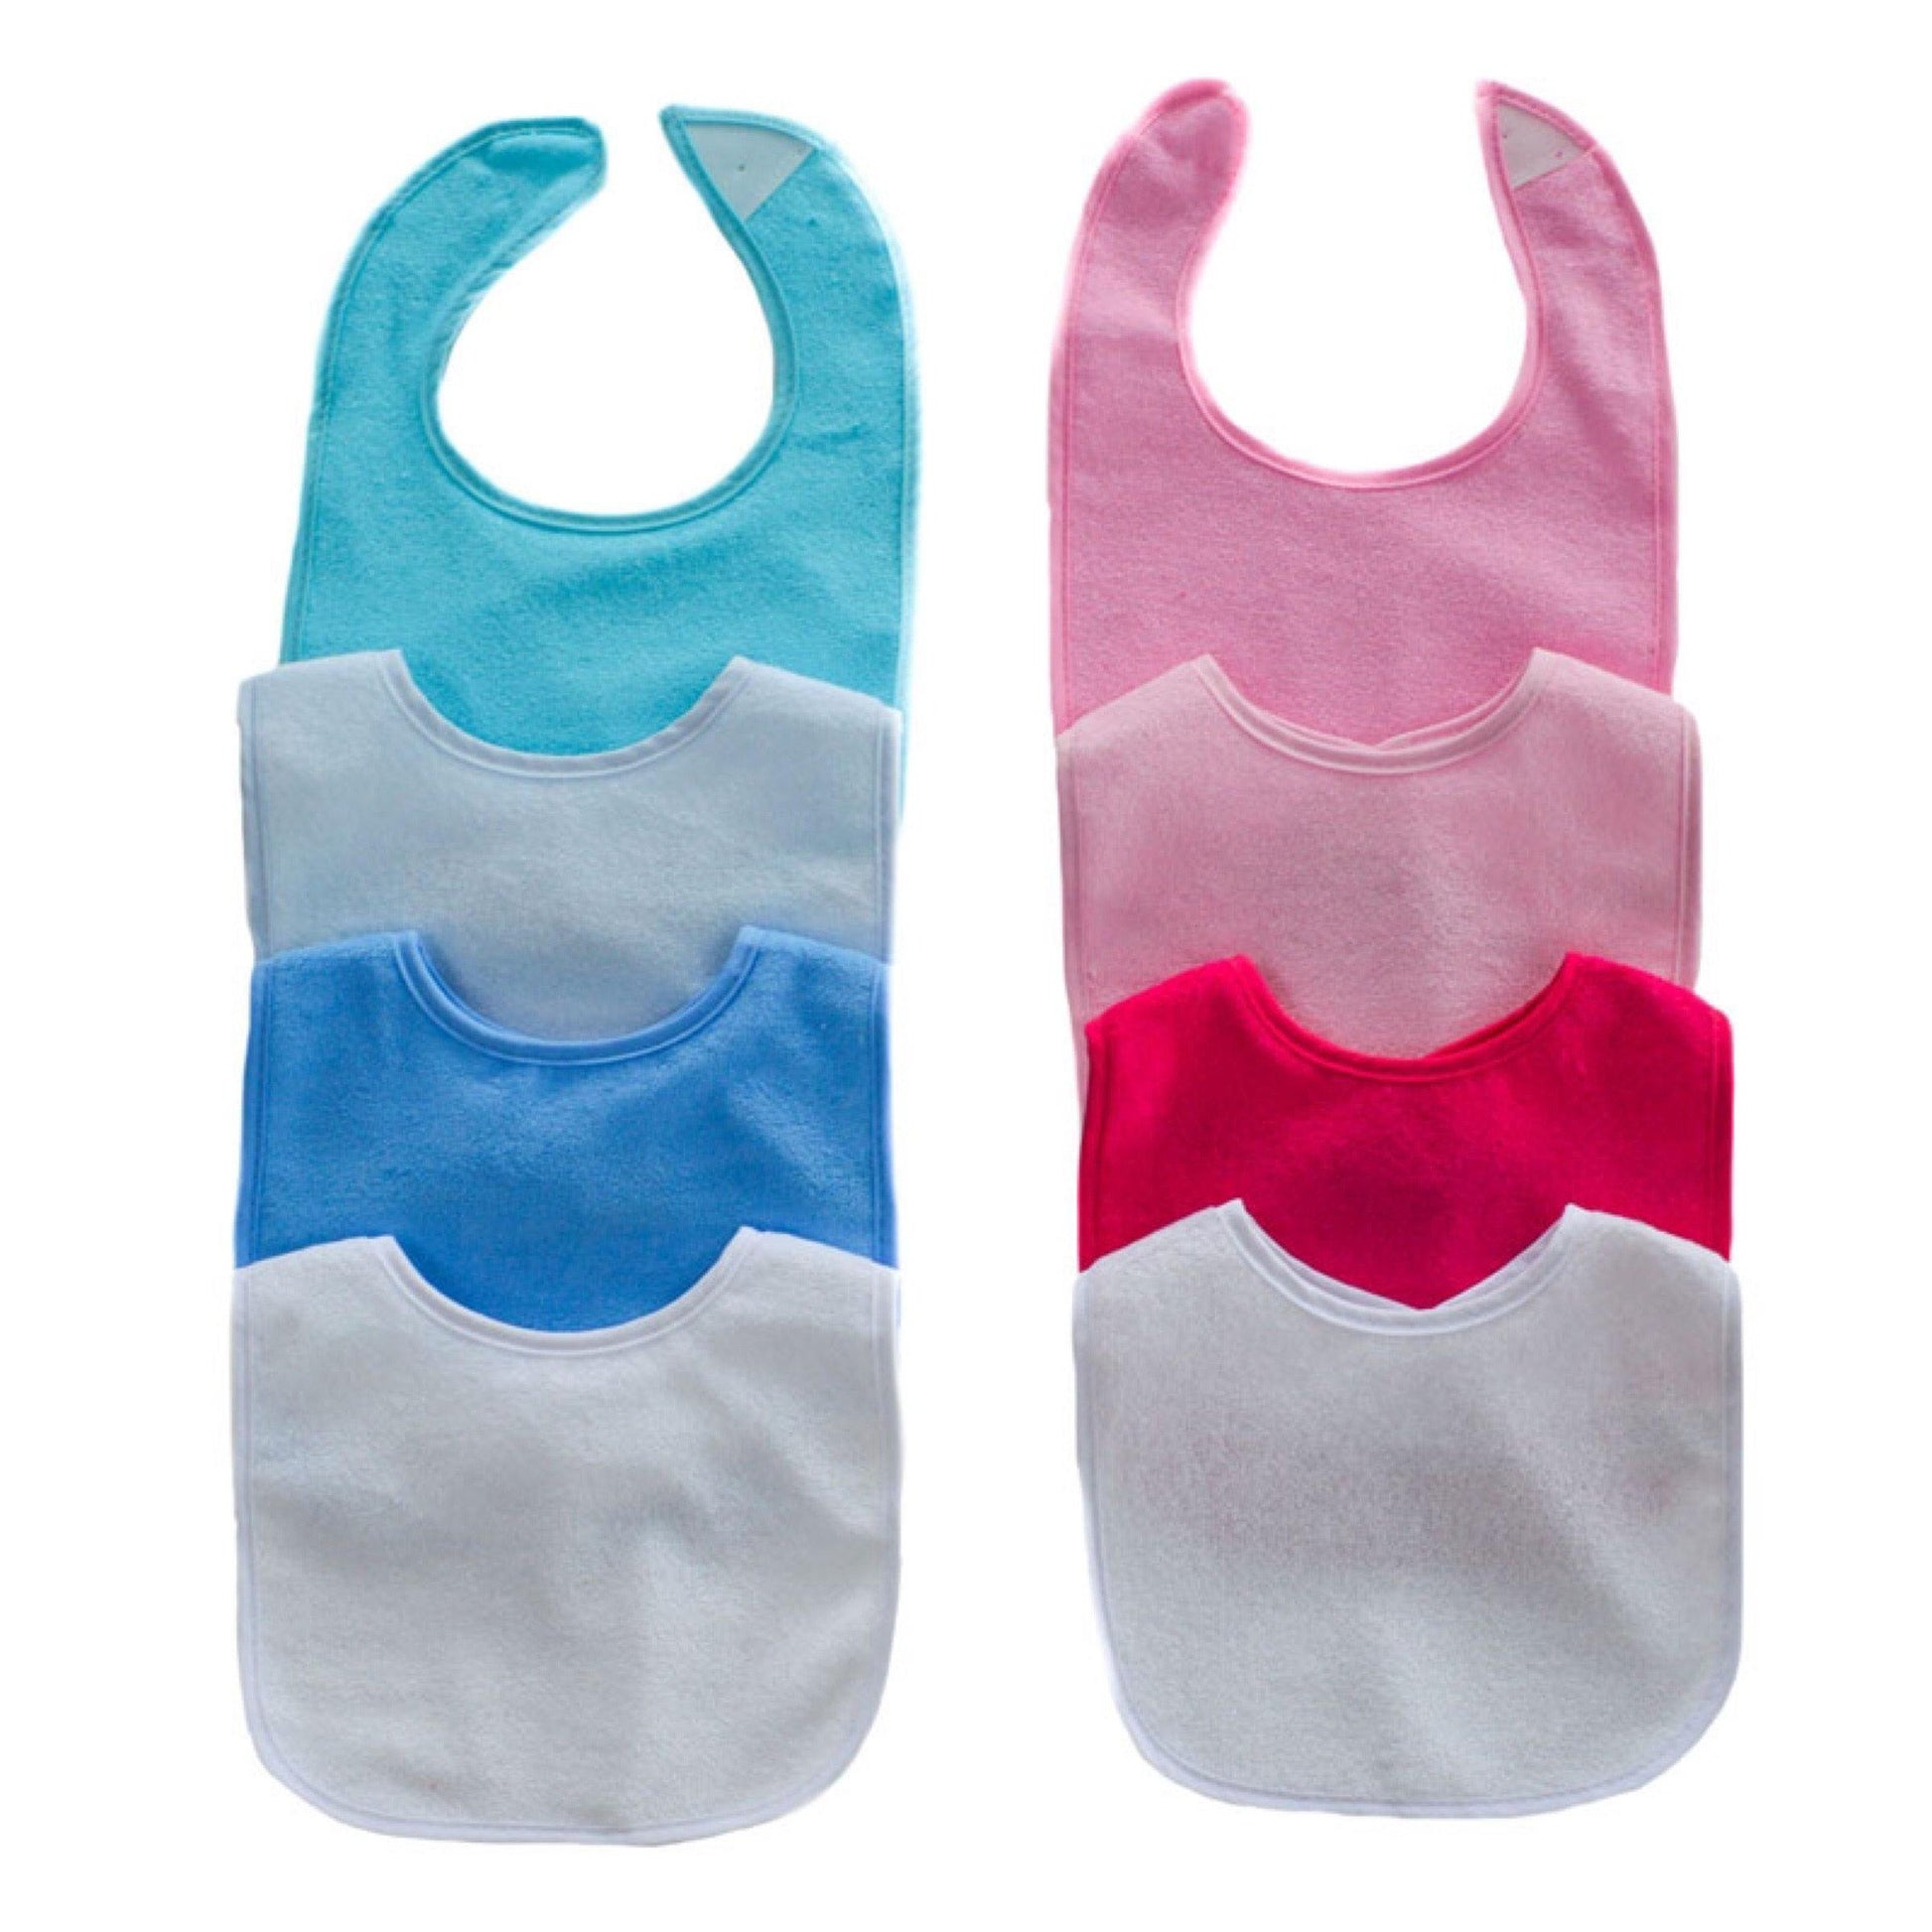 Plain Velcro Fastening Baby Bibs | Oscar & Me | Baby & Children’s Clothing & Accessories